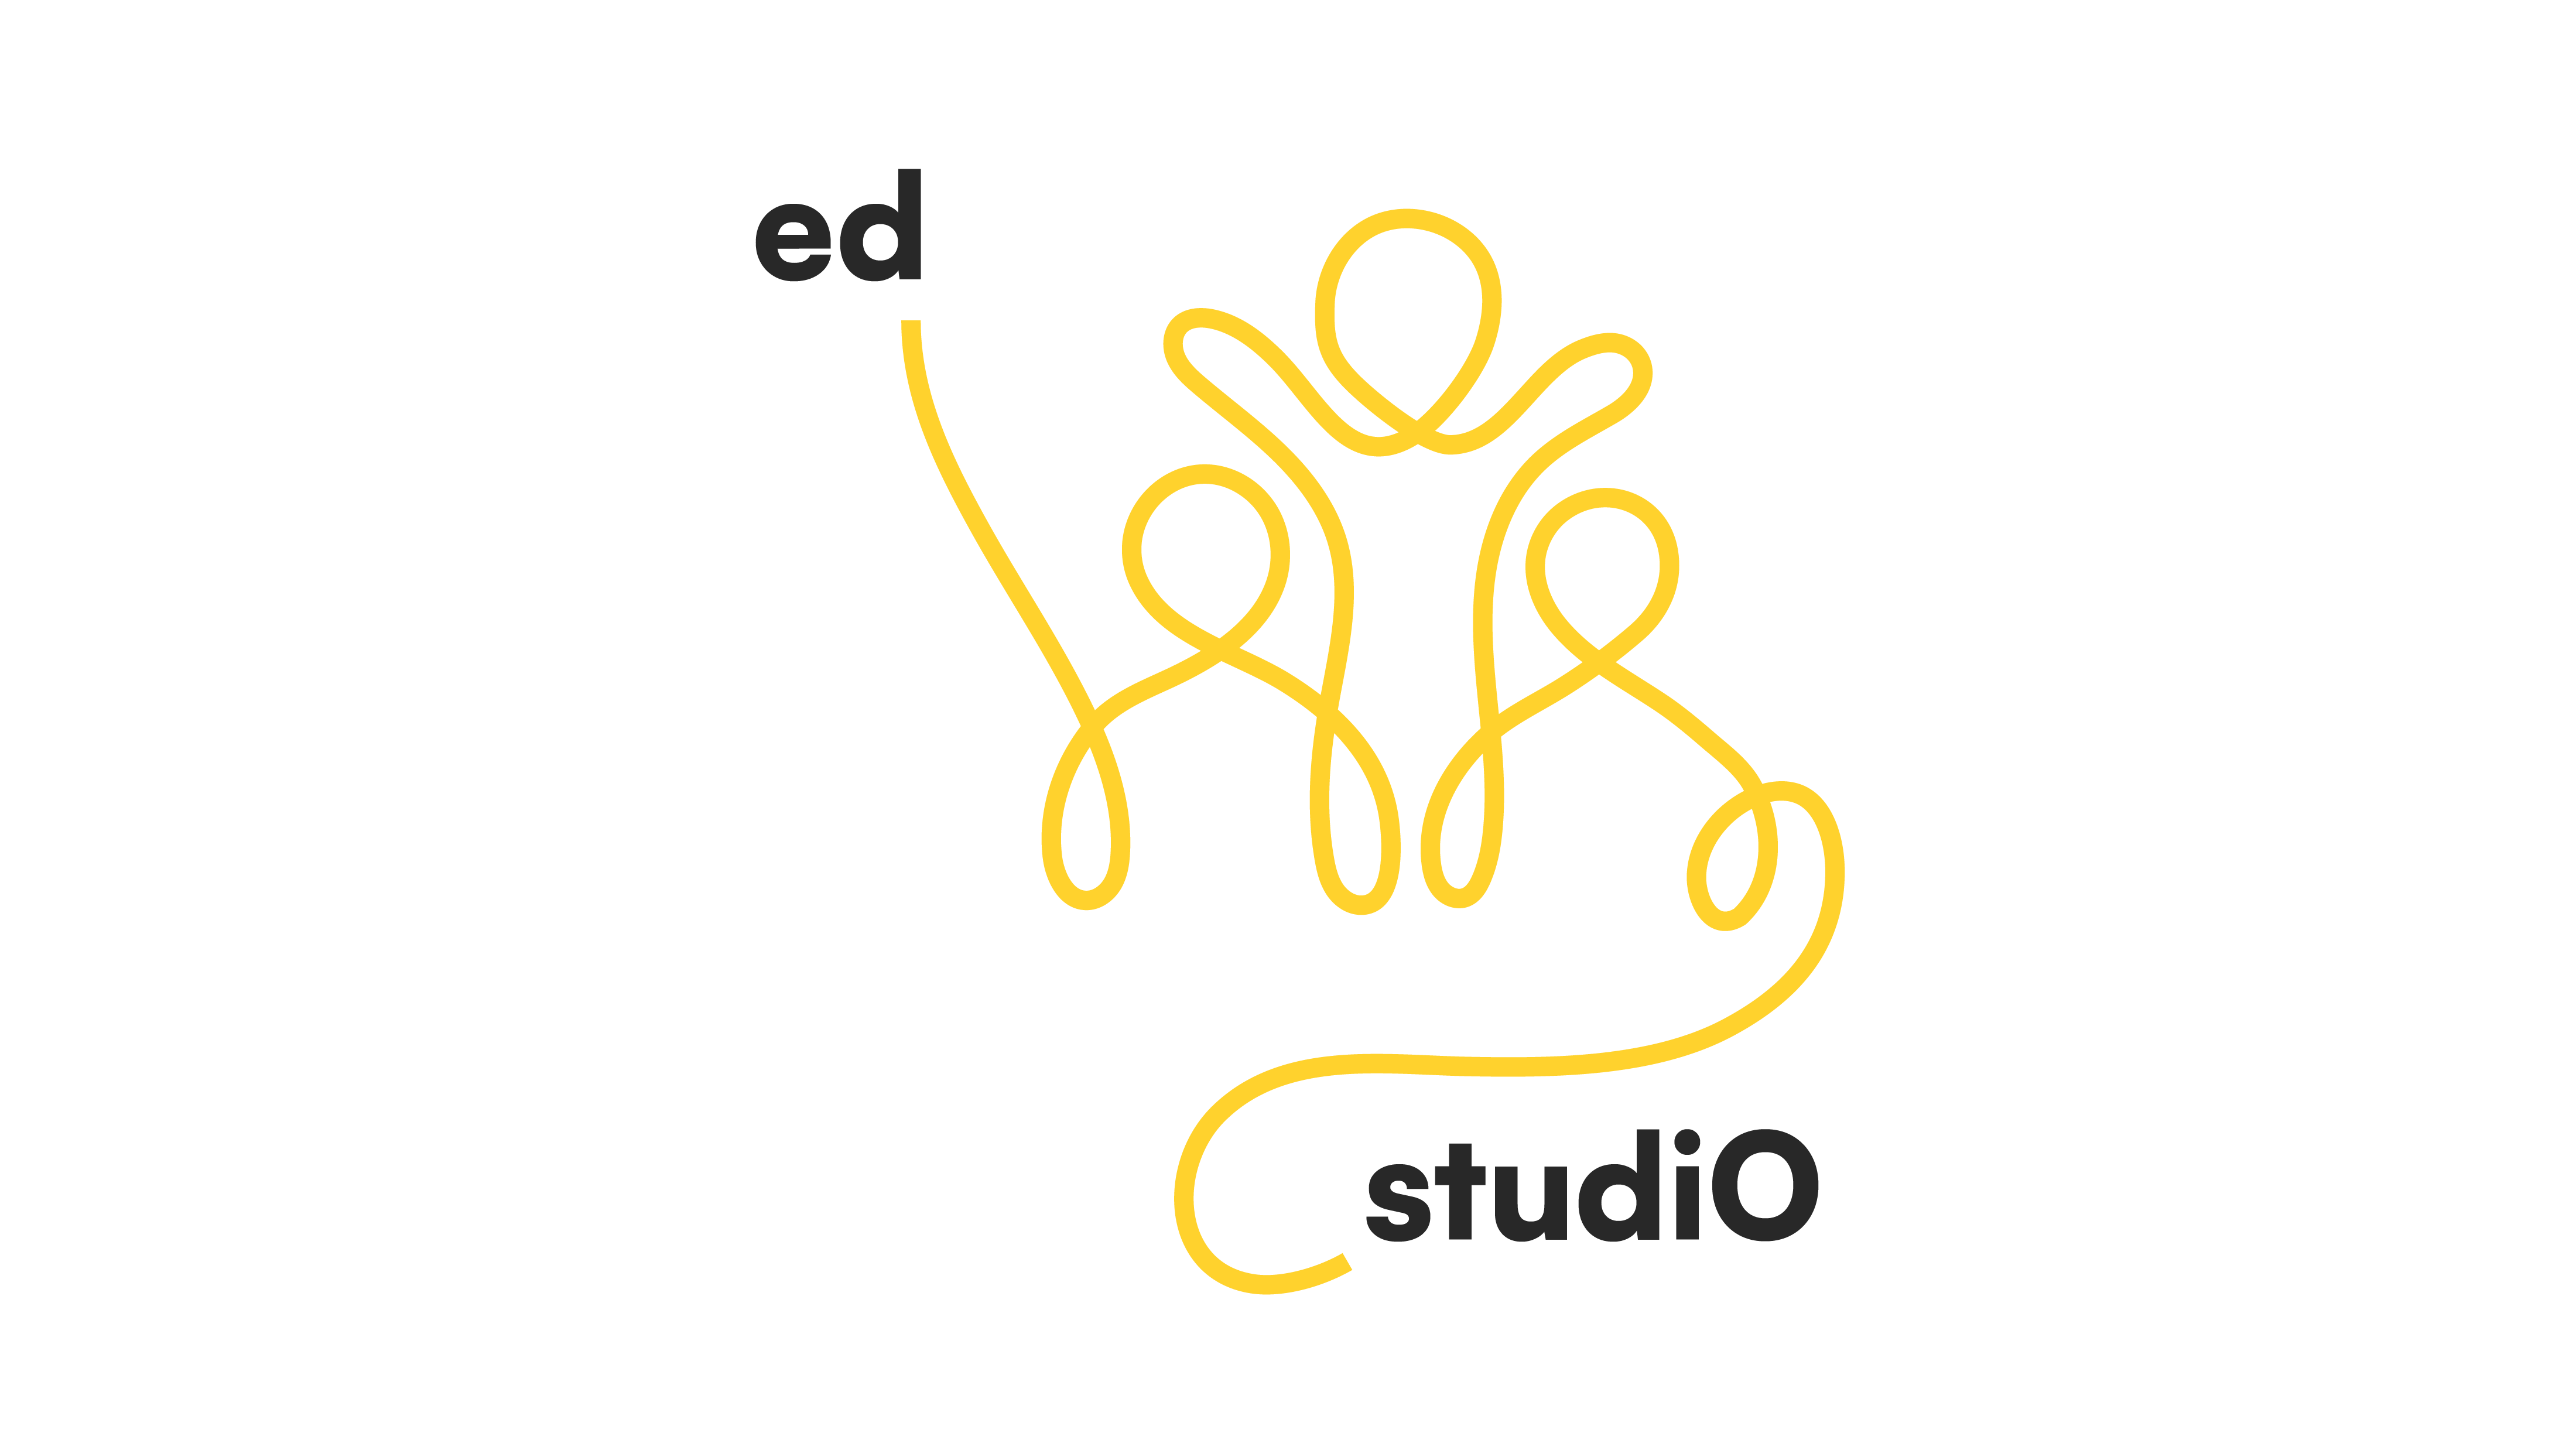 edstudiO logo